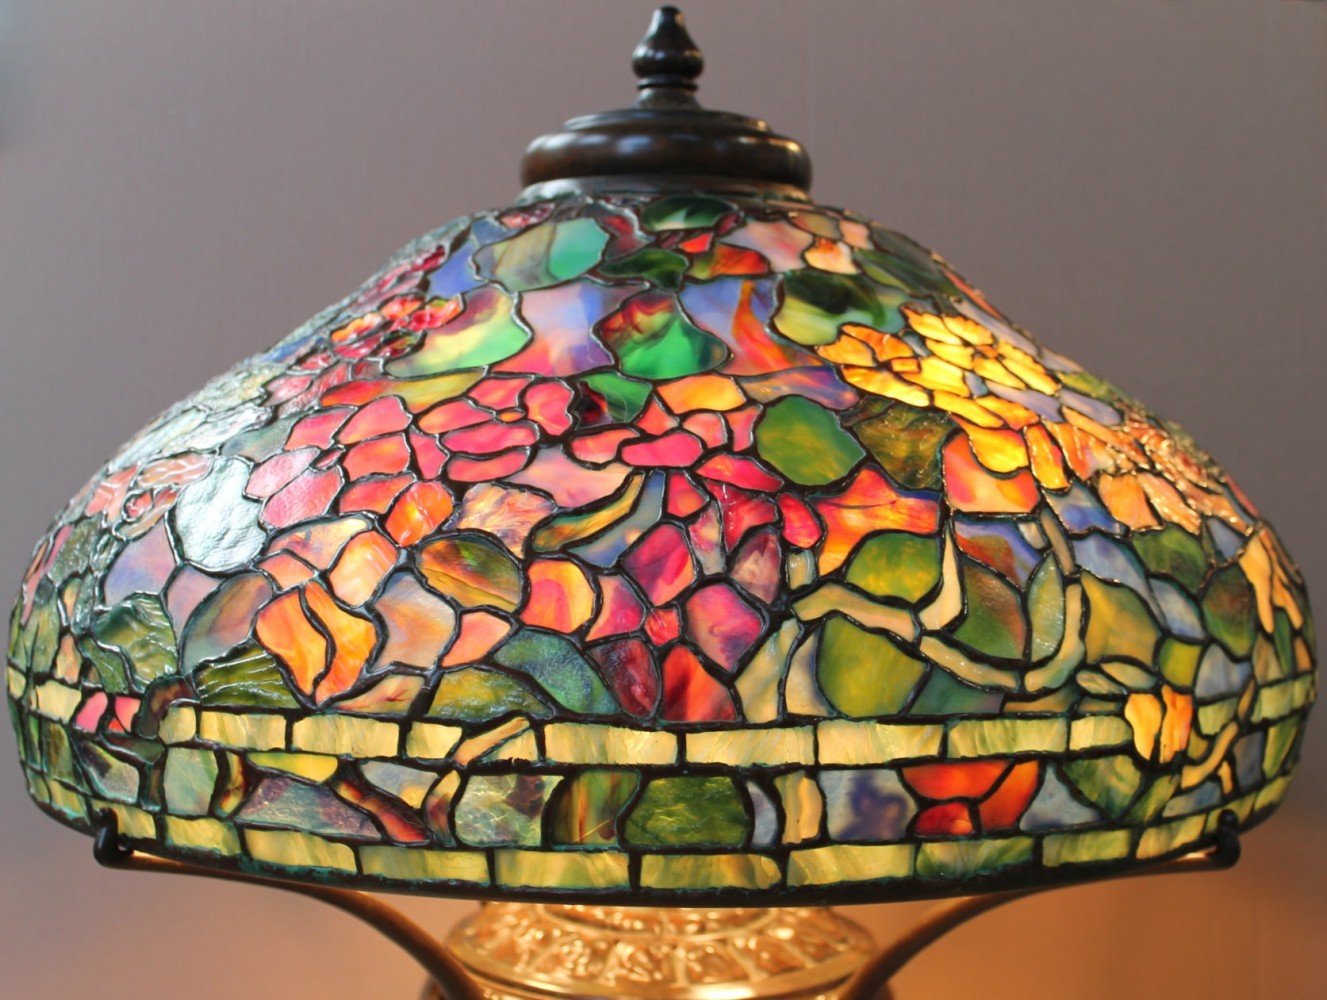 Tiffany Style Leaded Glass Nasturtium Lamp by Tiffany Studios